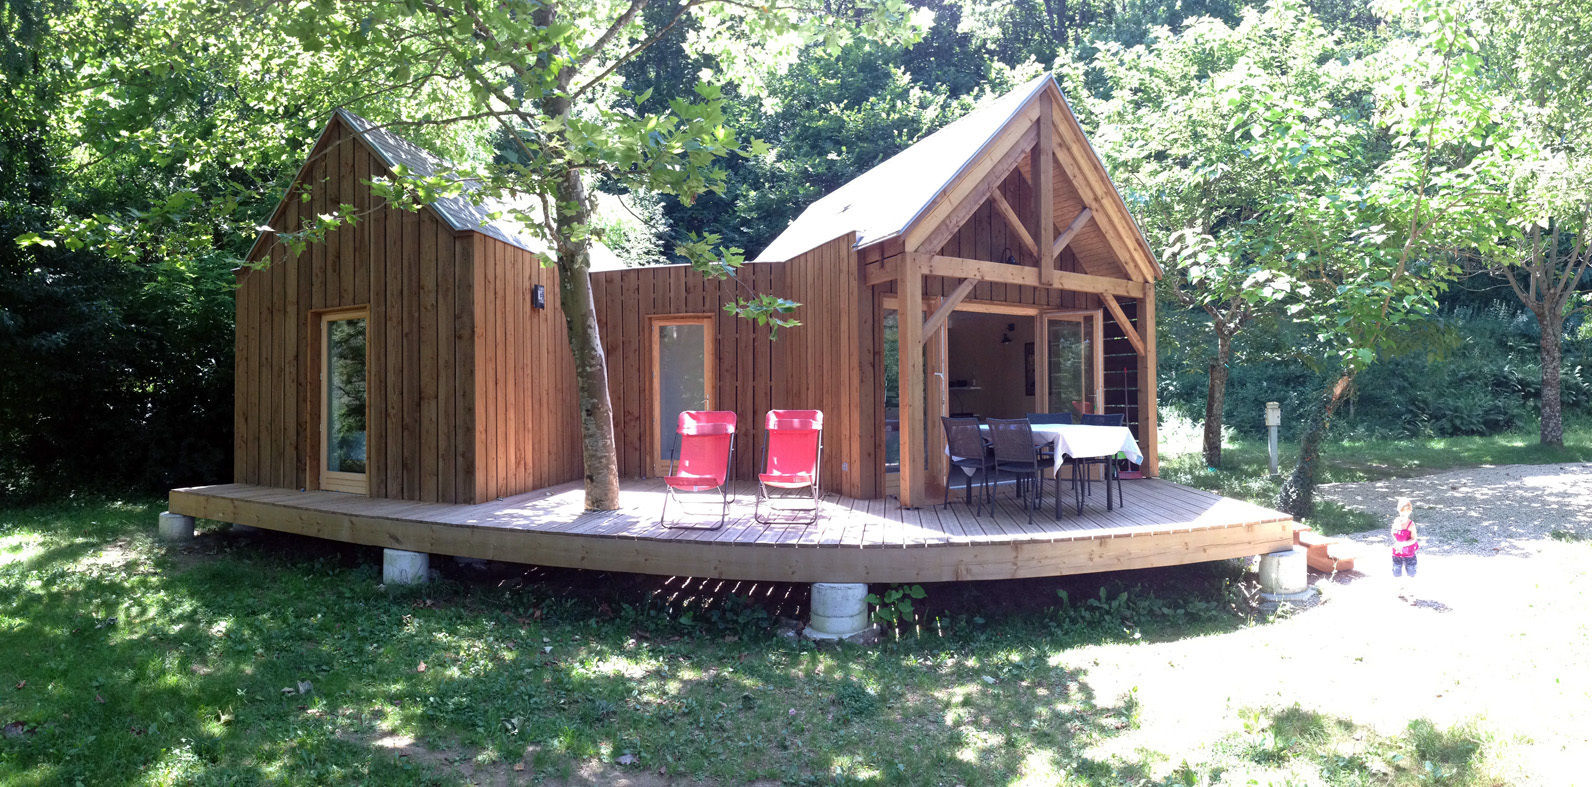 Habitat de loisir en bois - camping les Clots mirandol - bourgnounac, ...architectes ...architectes Ticari alanlar Oteller